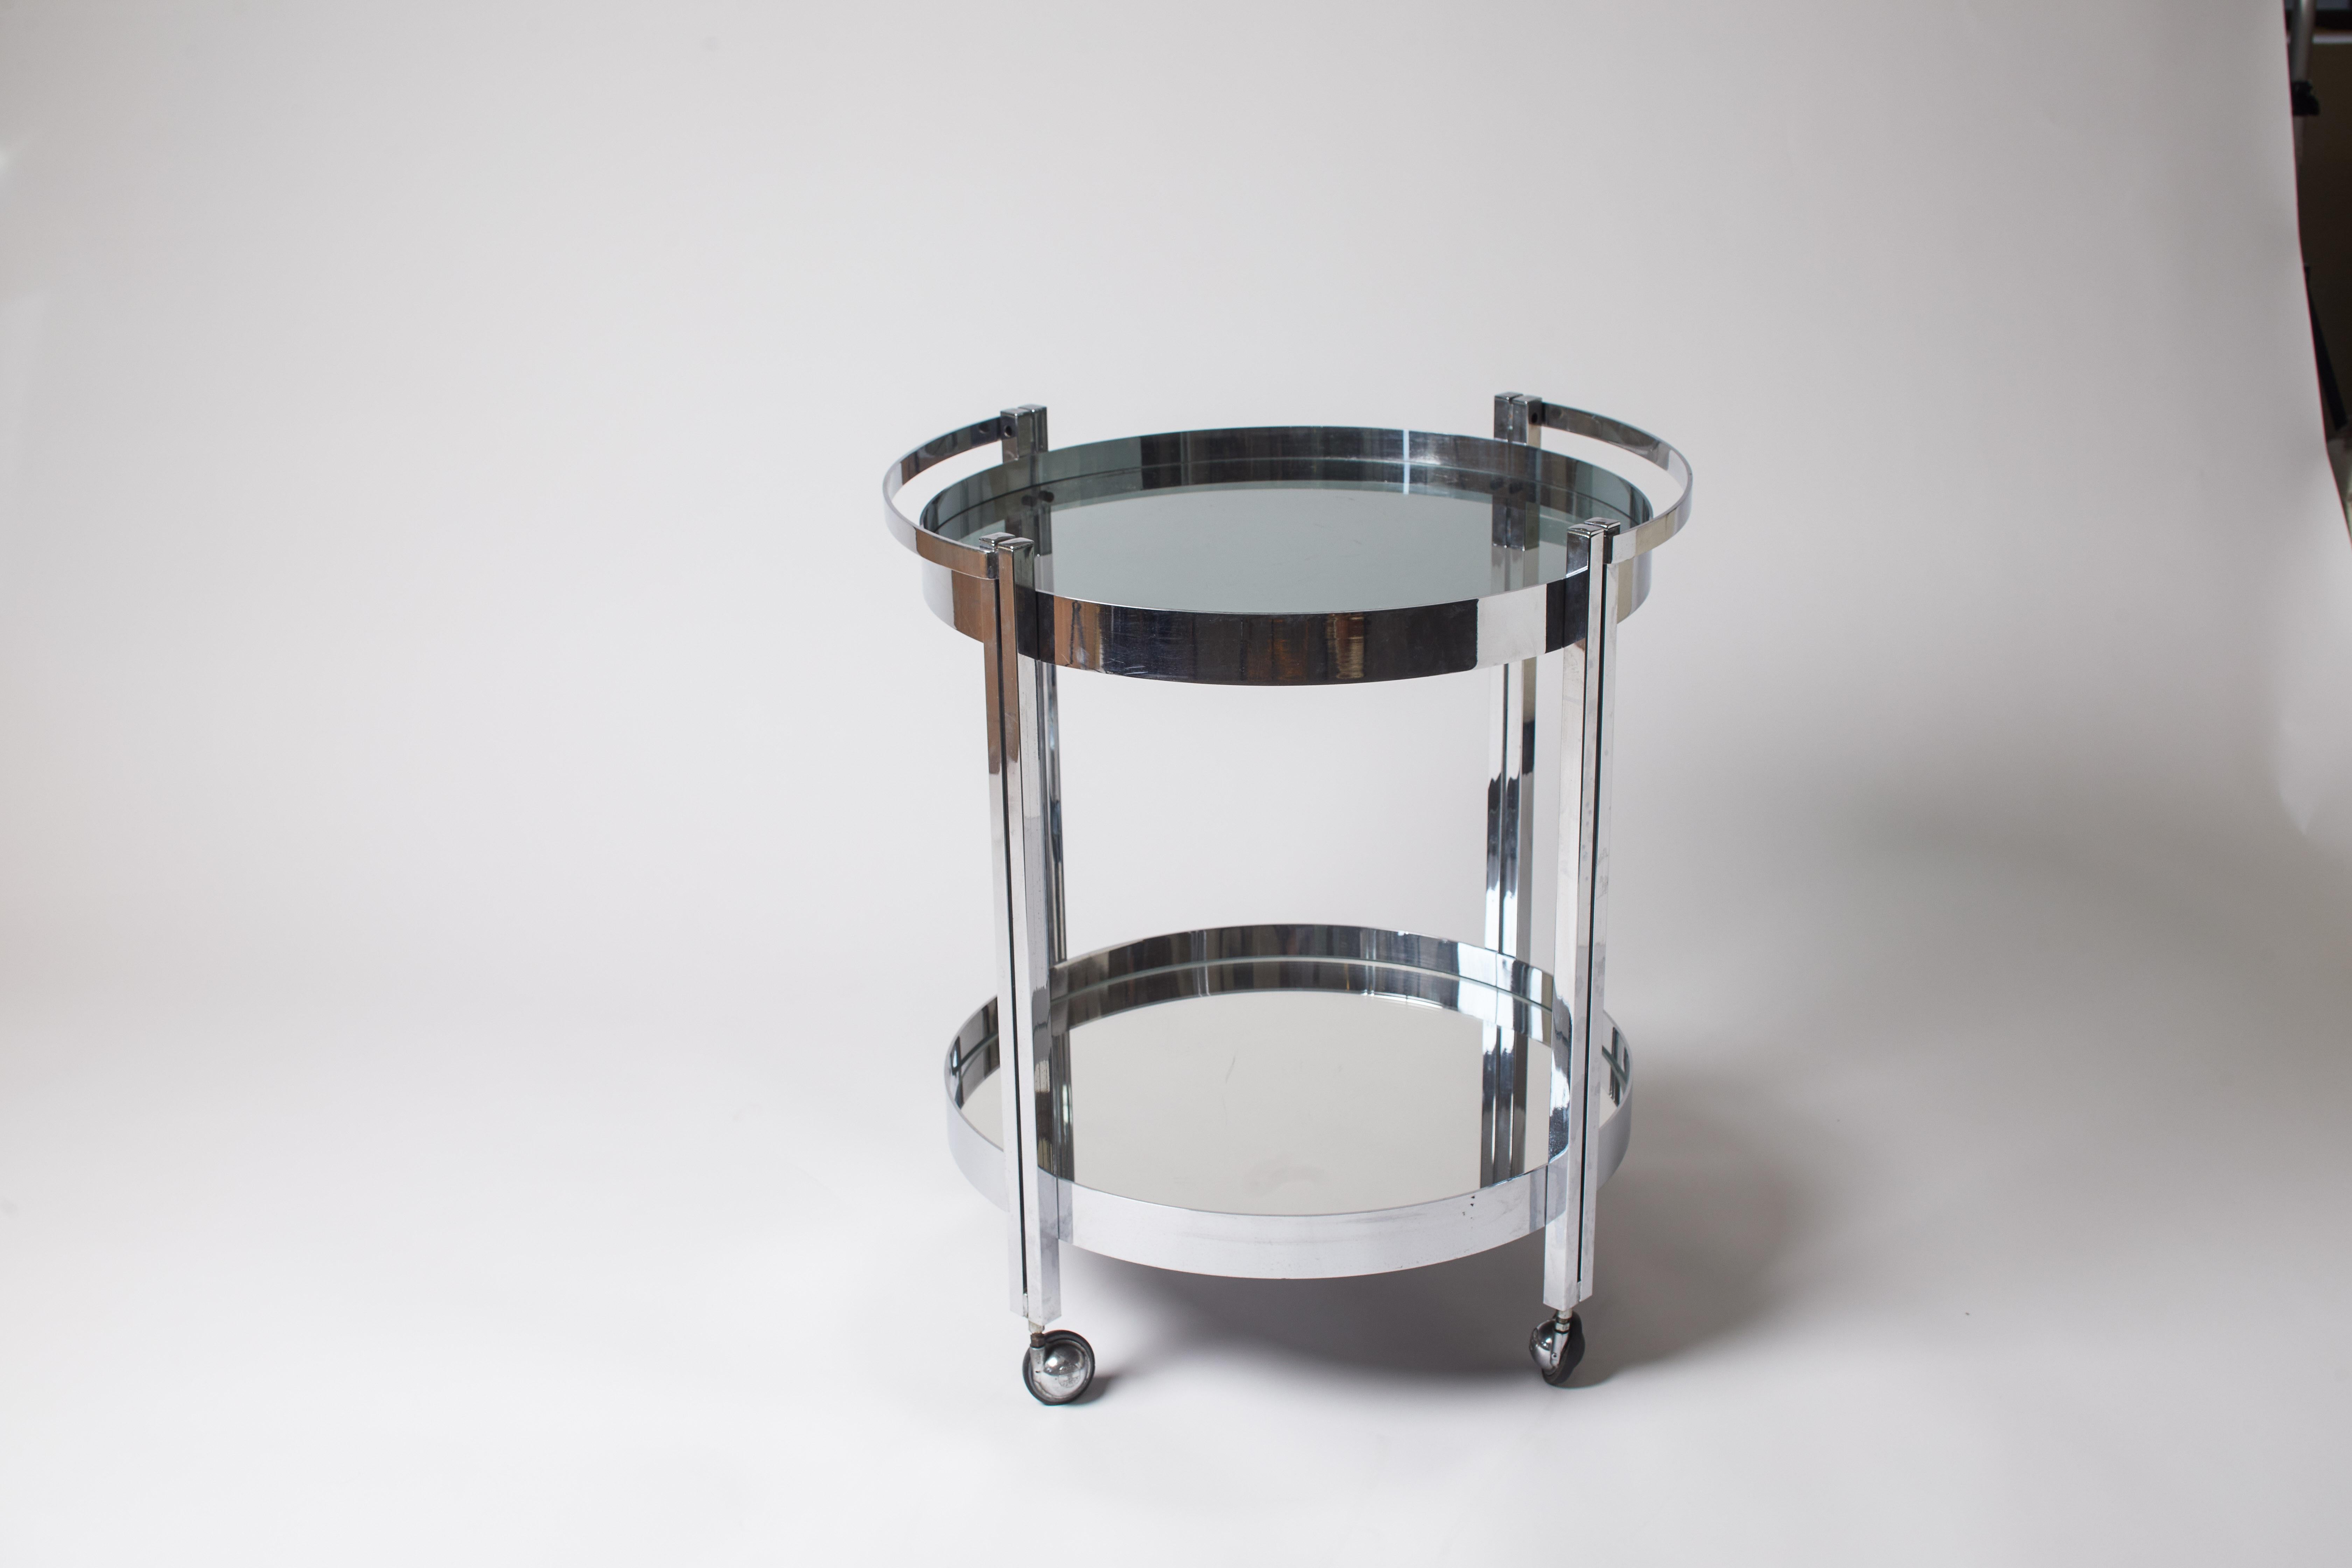 1970s Italian chrome two-tier circular bar cart with glass top and mirrored bottom shelf.